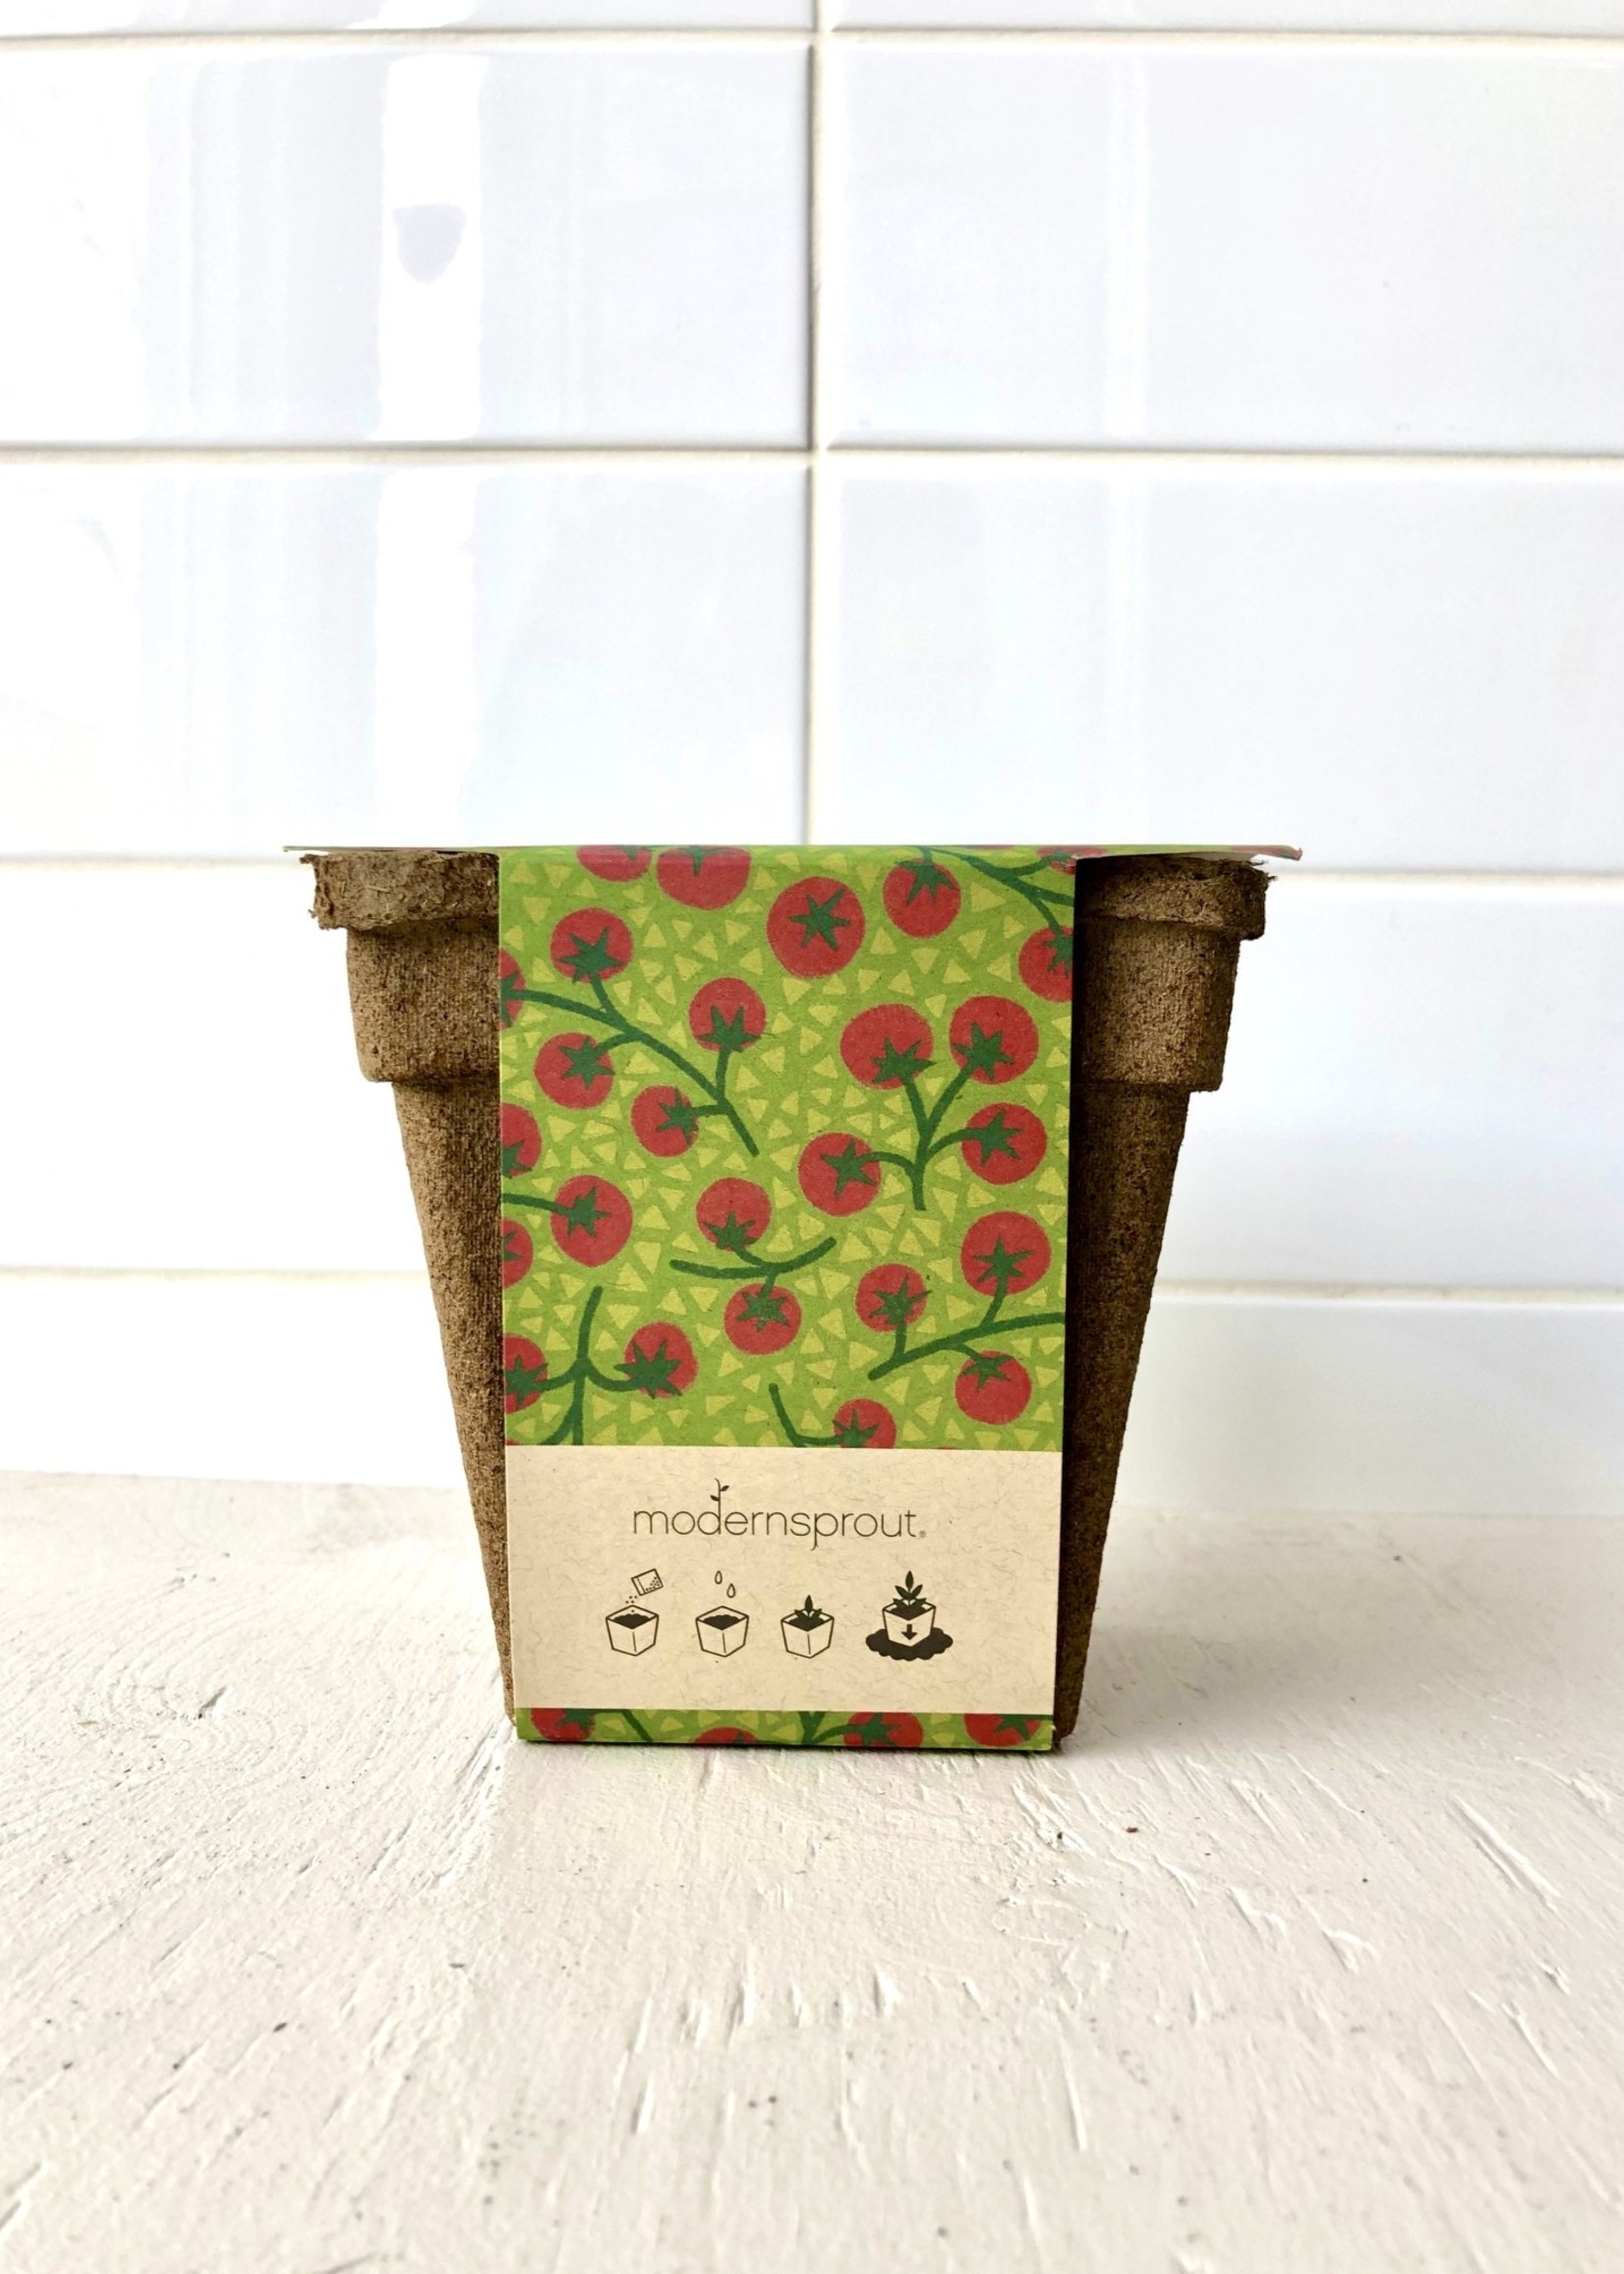 Modern Sprout Drop-In Garden Kits